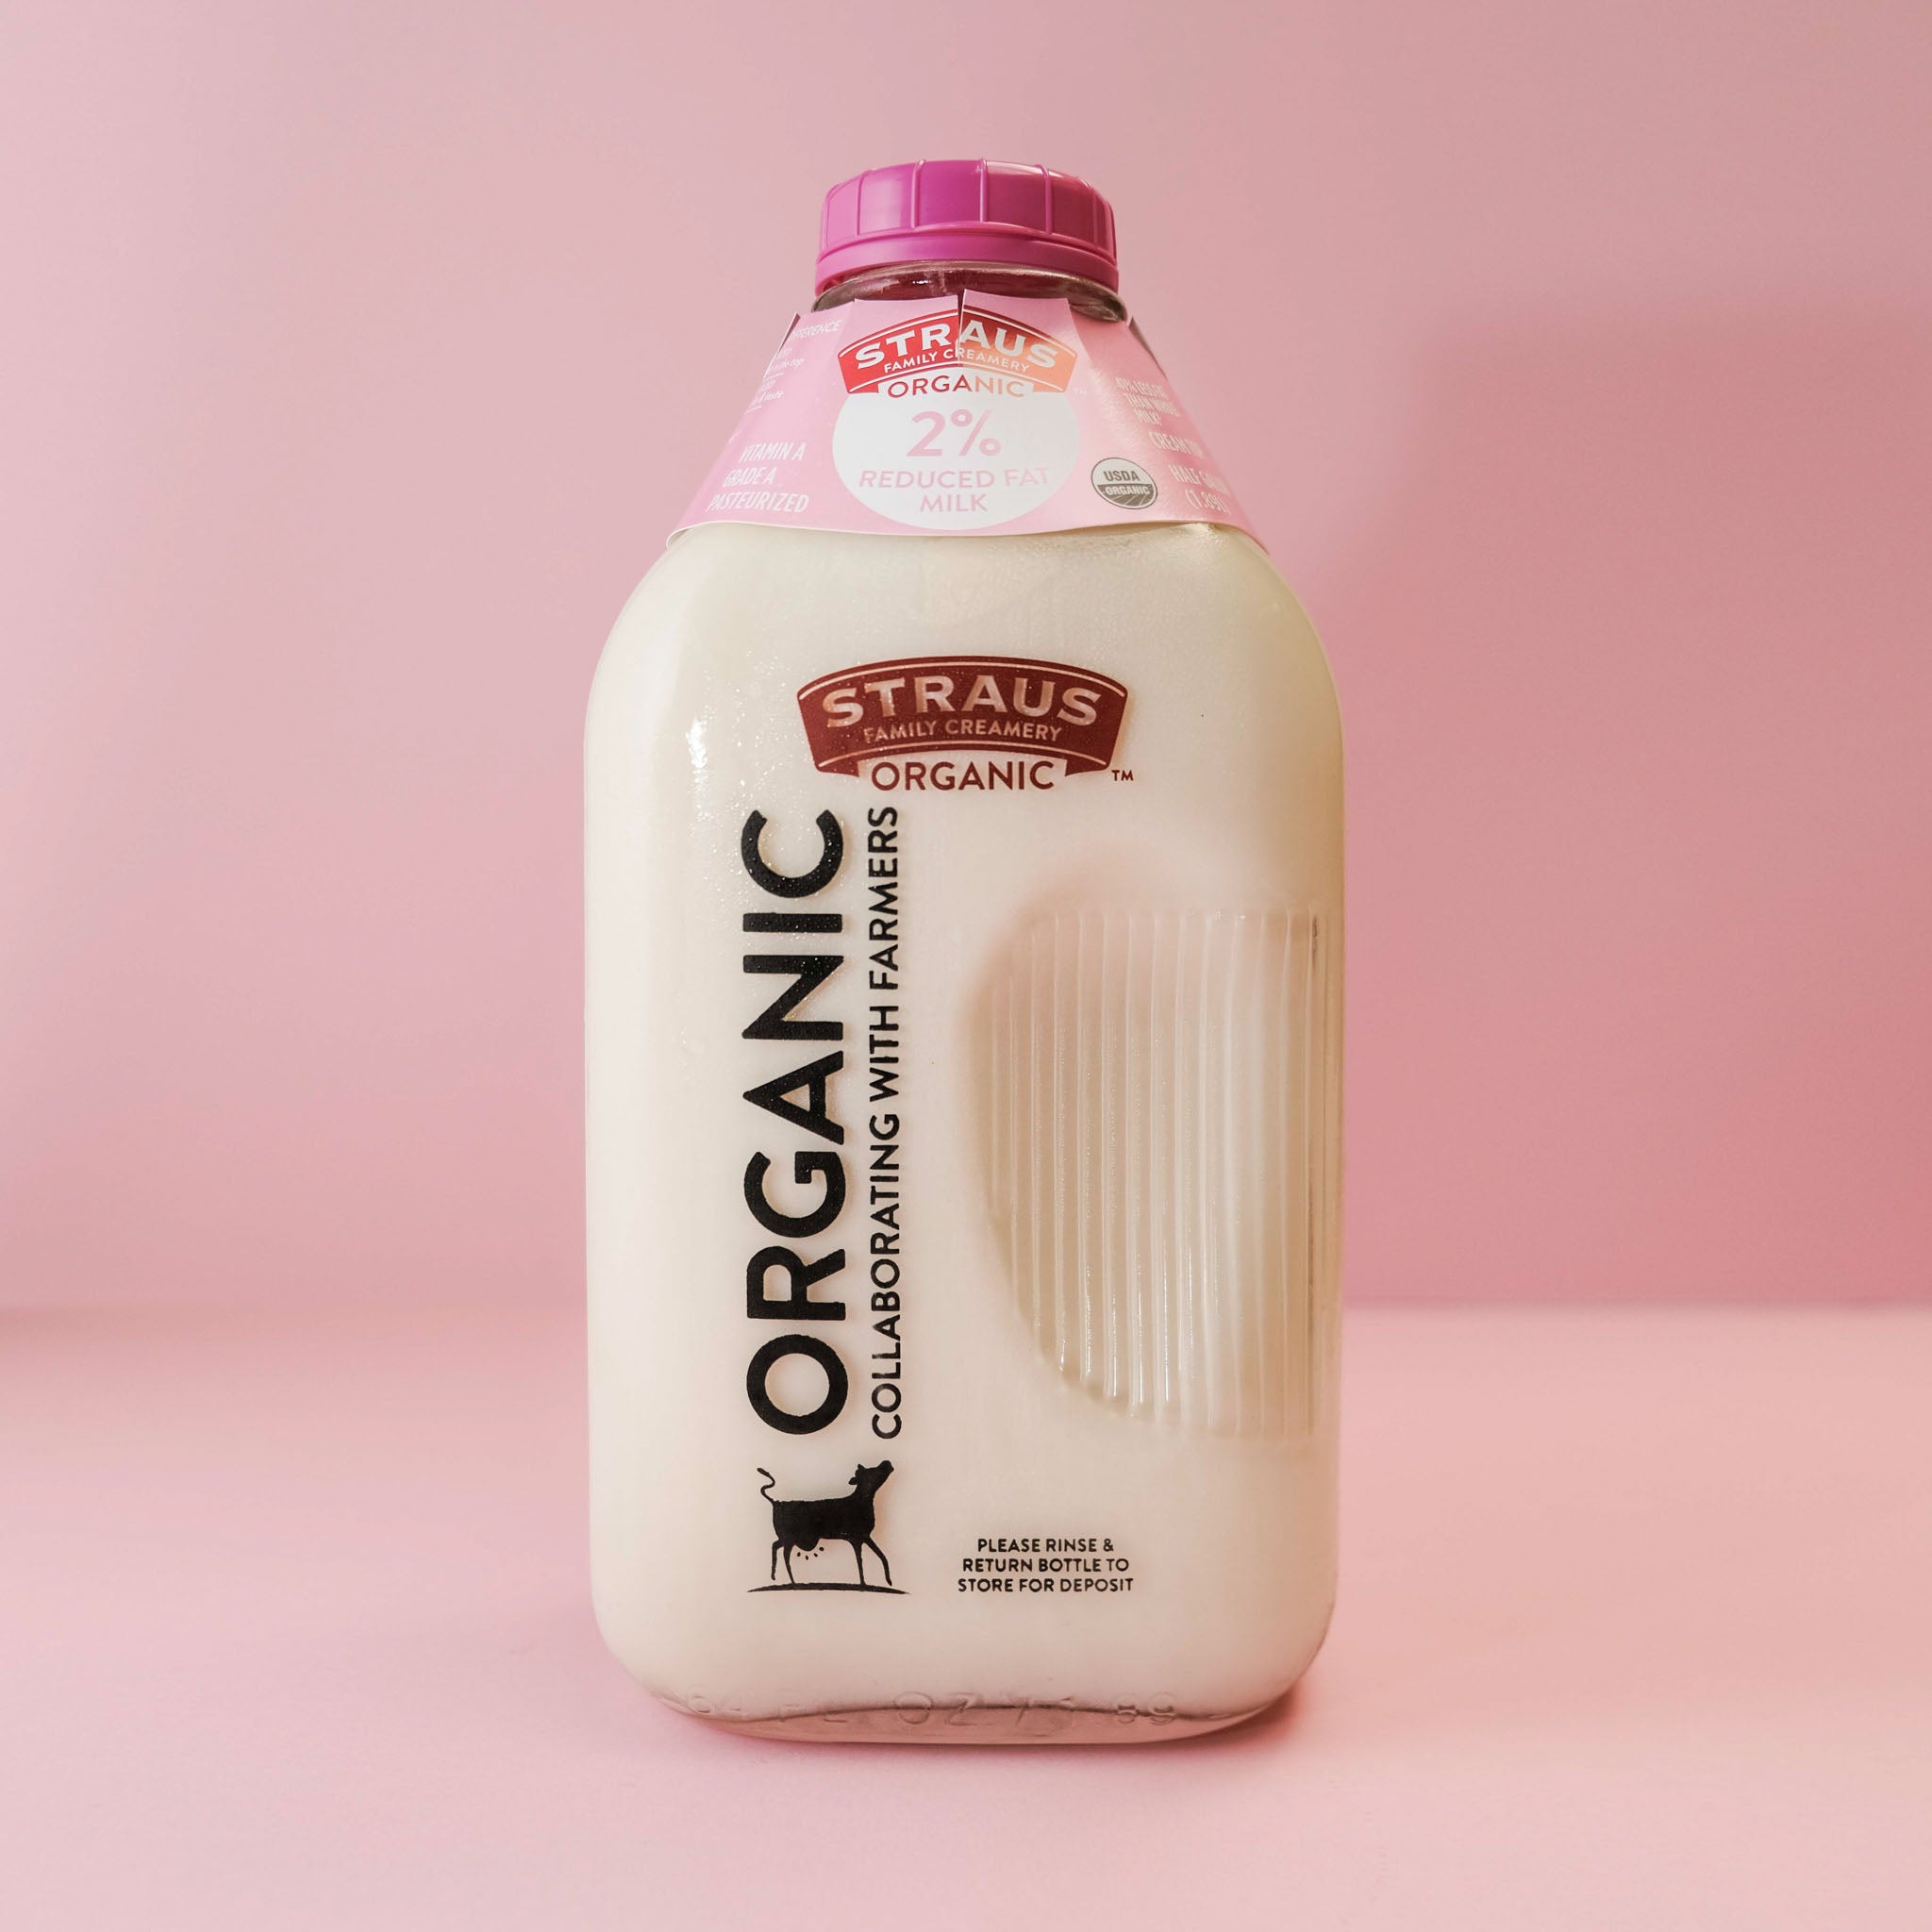 Organic Reduced Fat ( 2% ) Milk